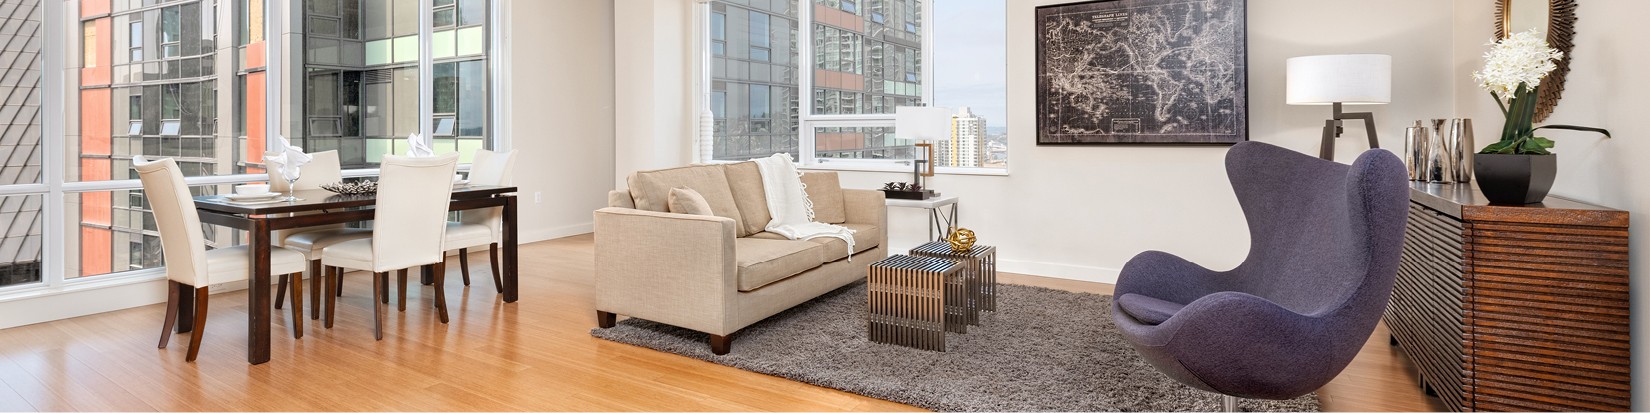 Brook Furniture Rental Linkedin